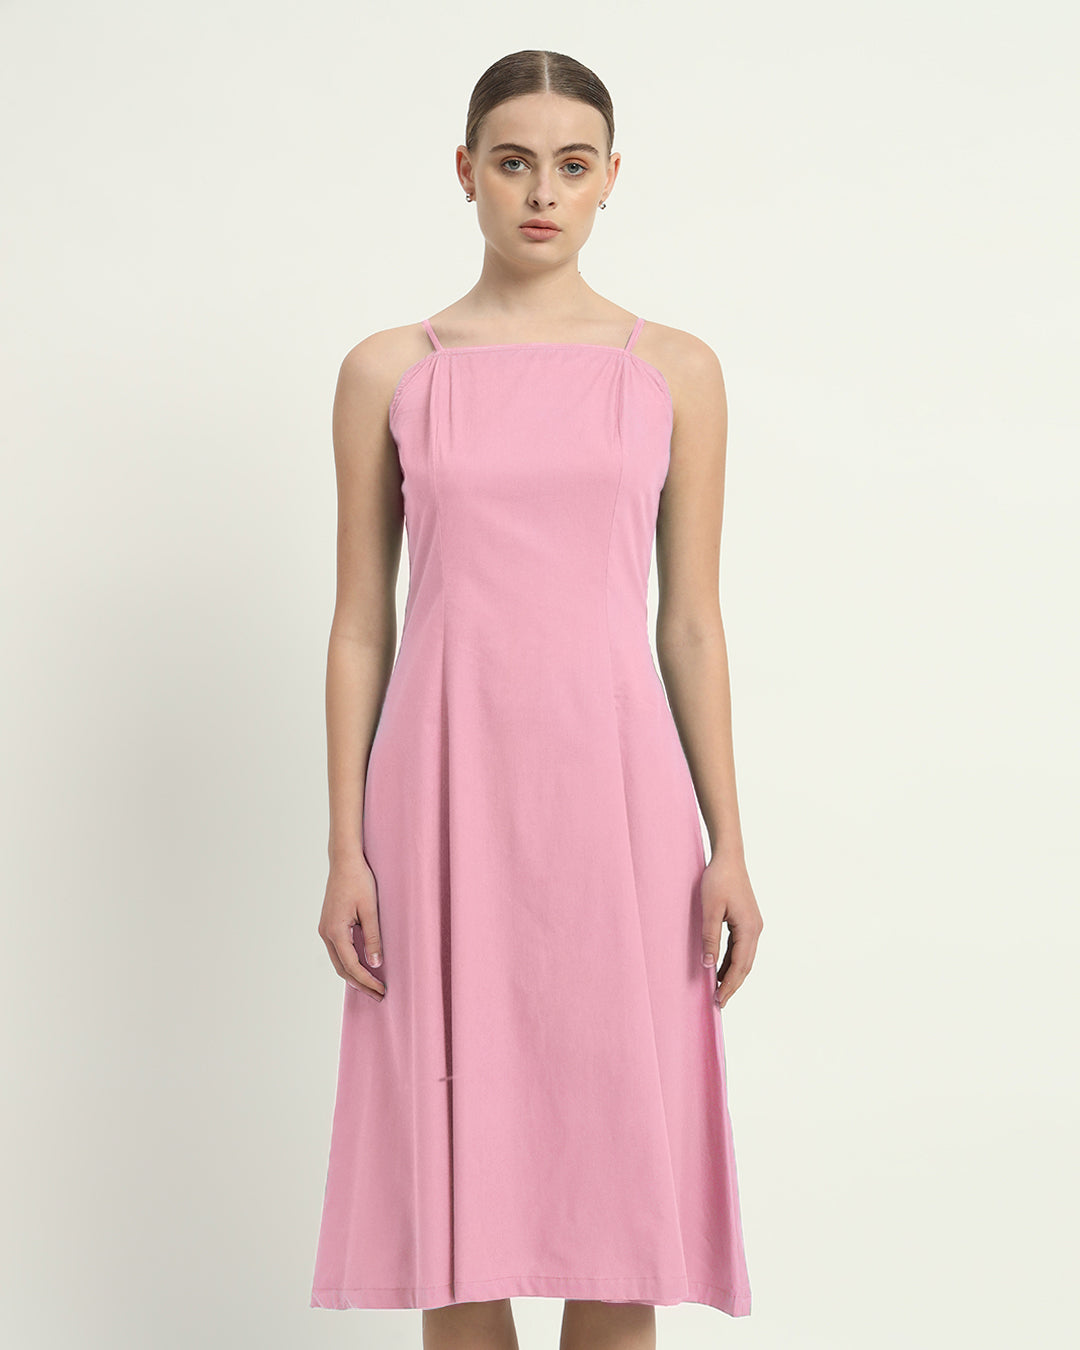 The Valatie Fondant Pink Cotton Dress